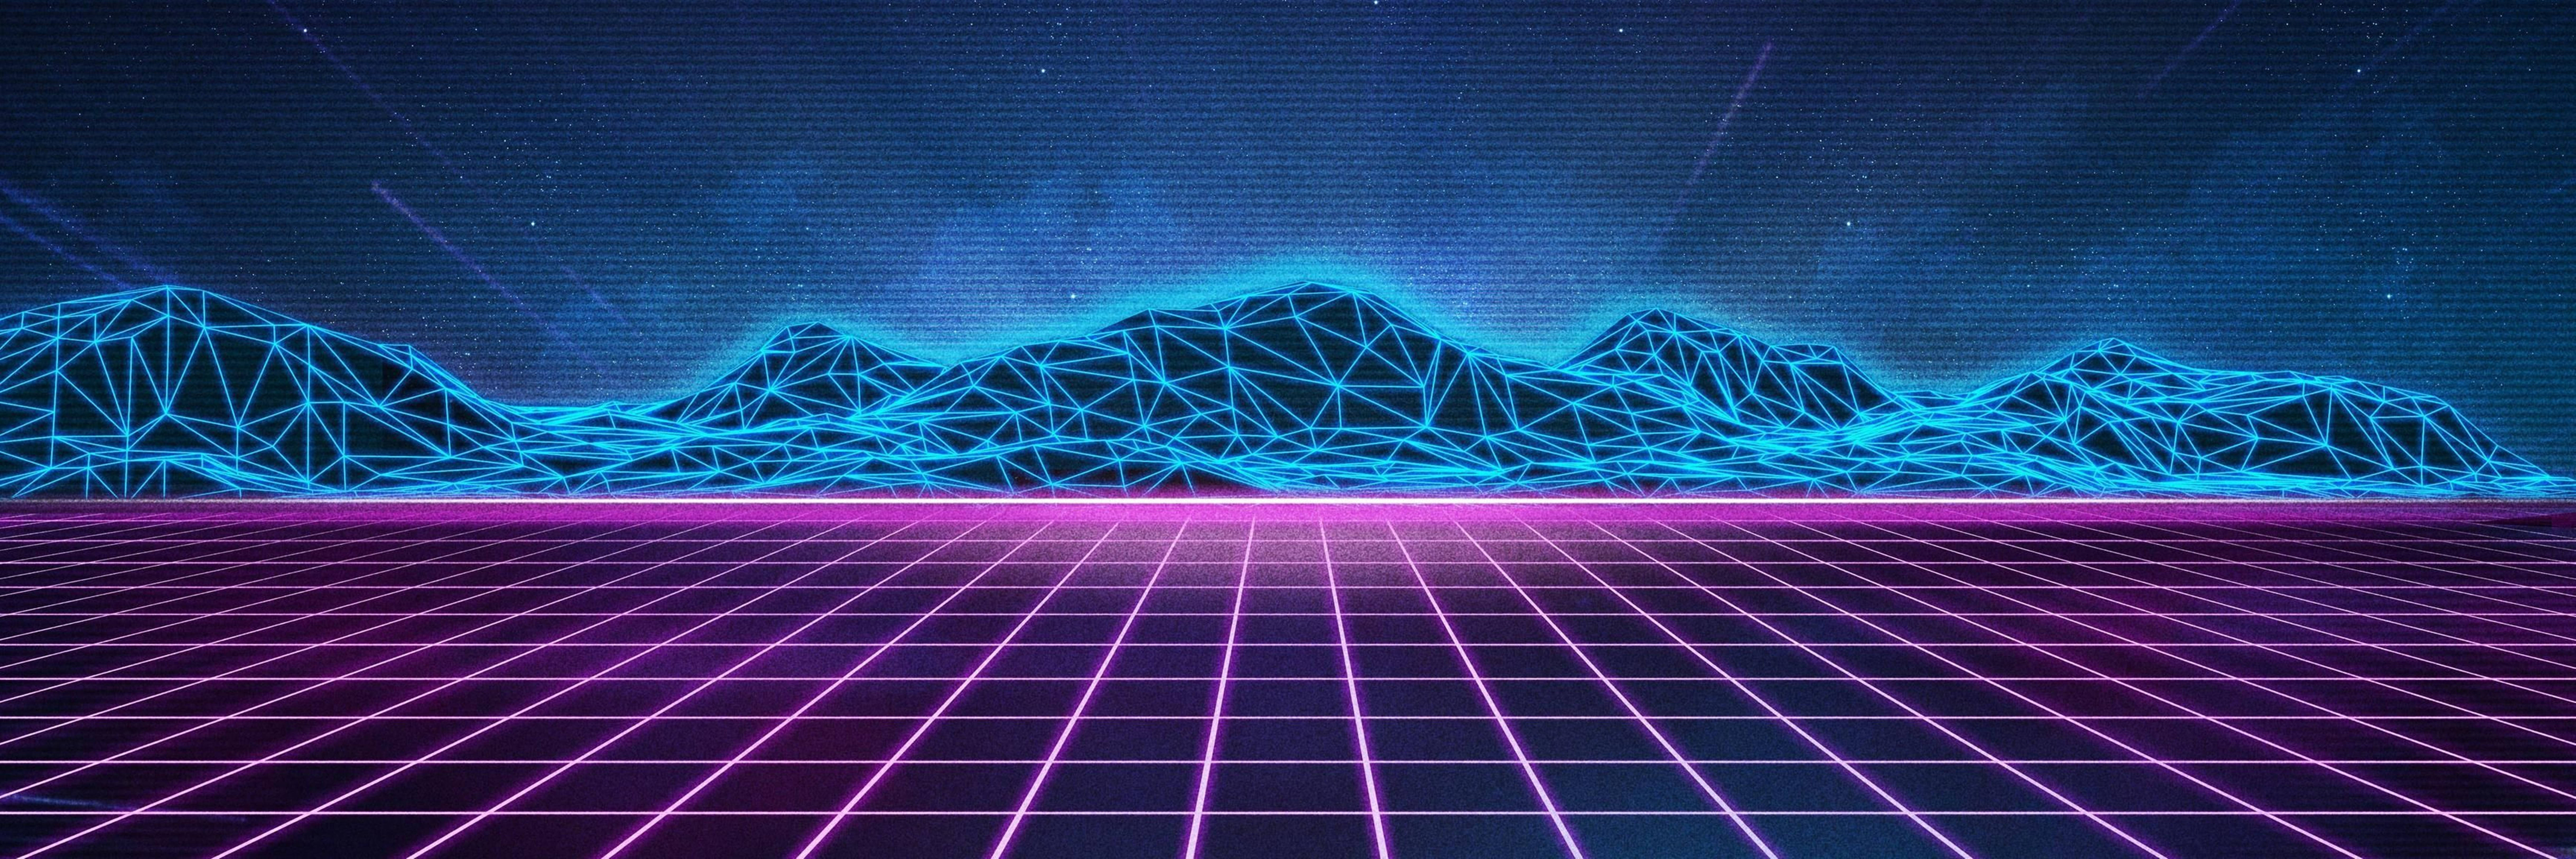 Retro Neon Grid Field Blue Mountains 4k